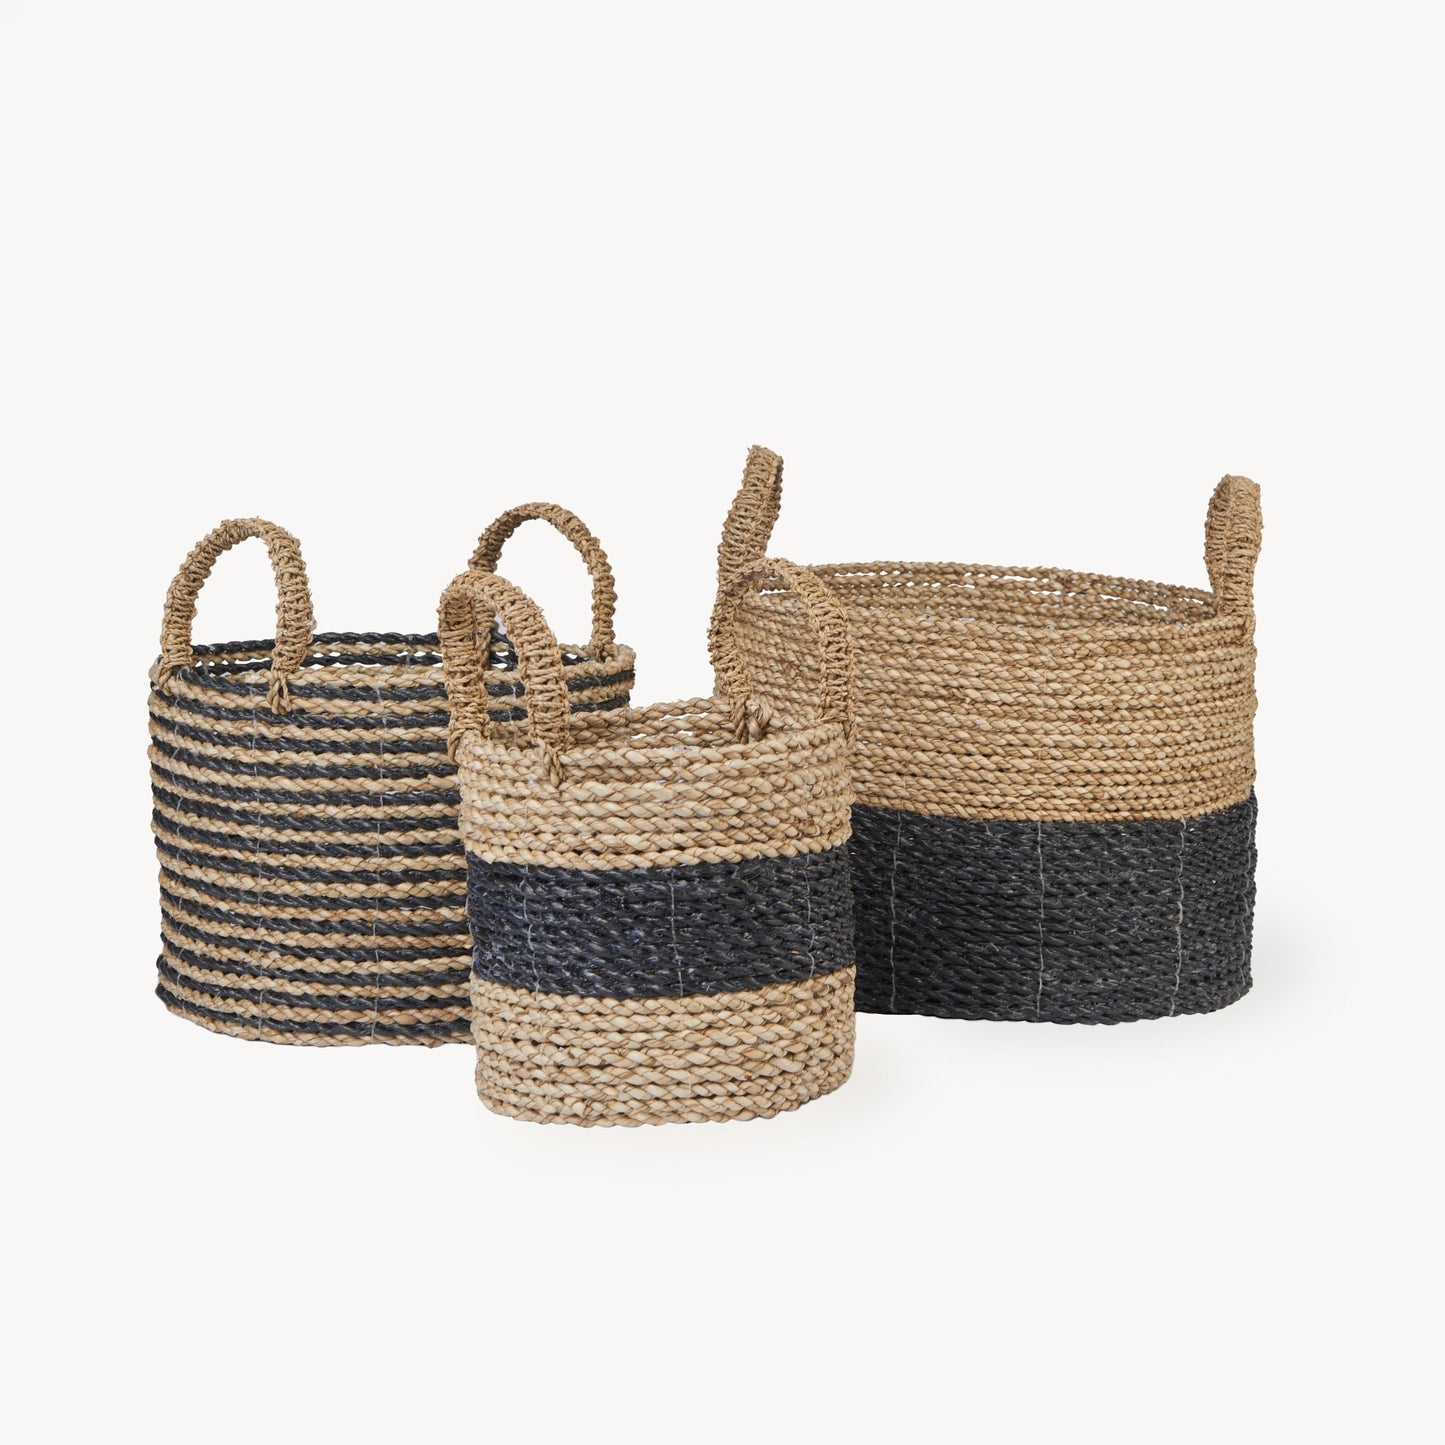 Handled Woven Baskets - Black/Natural